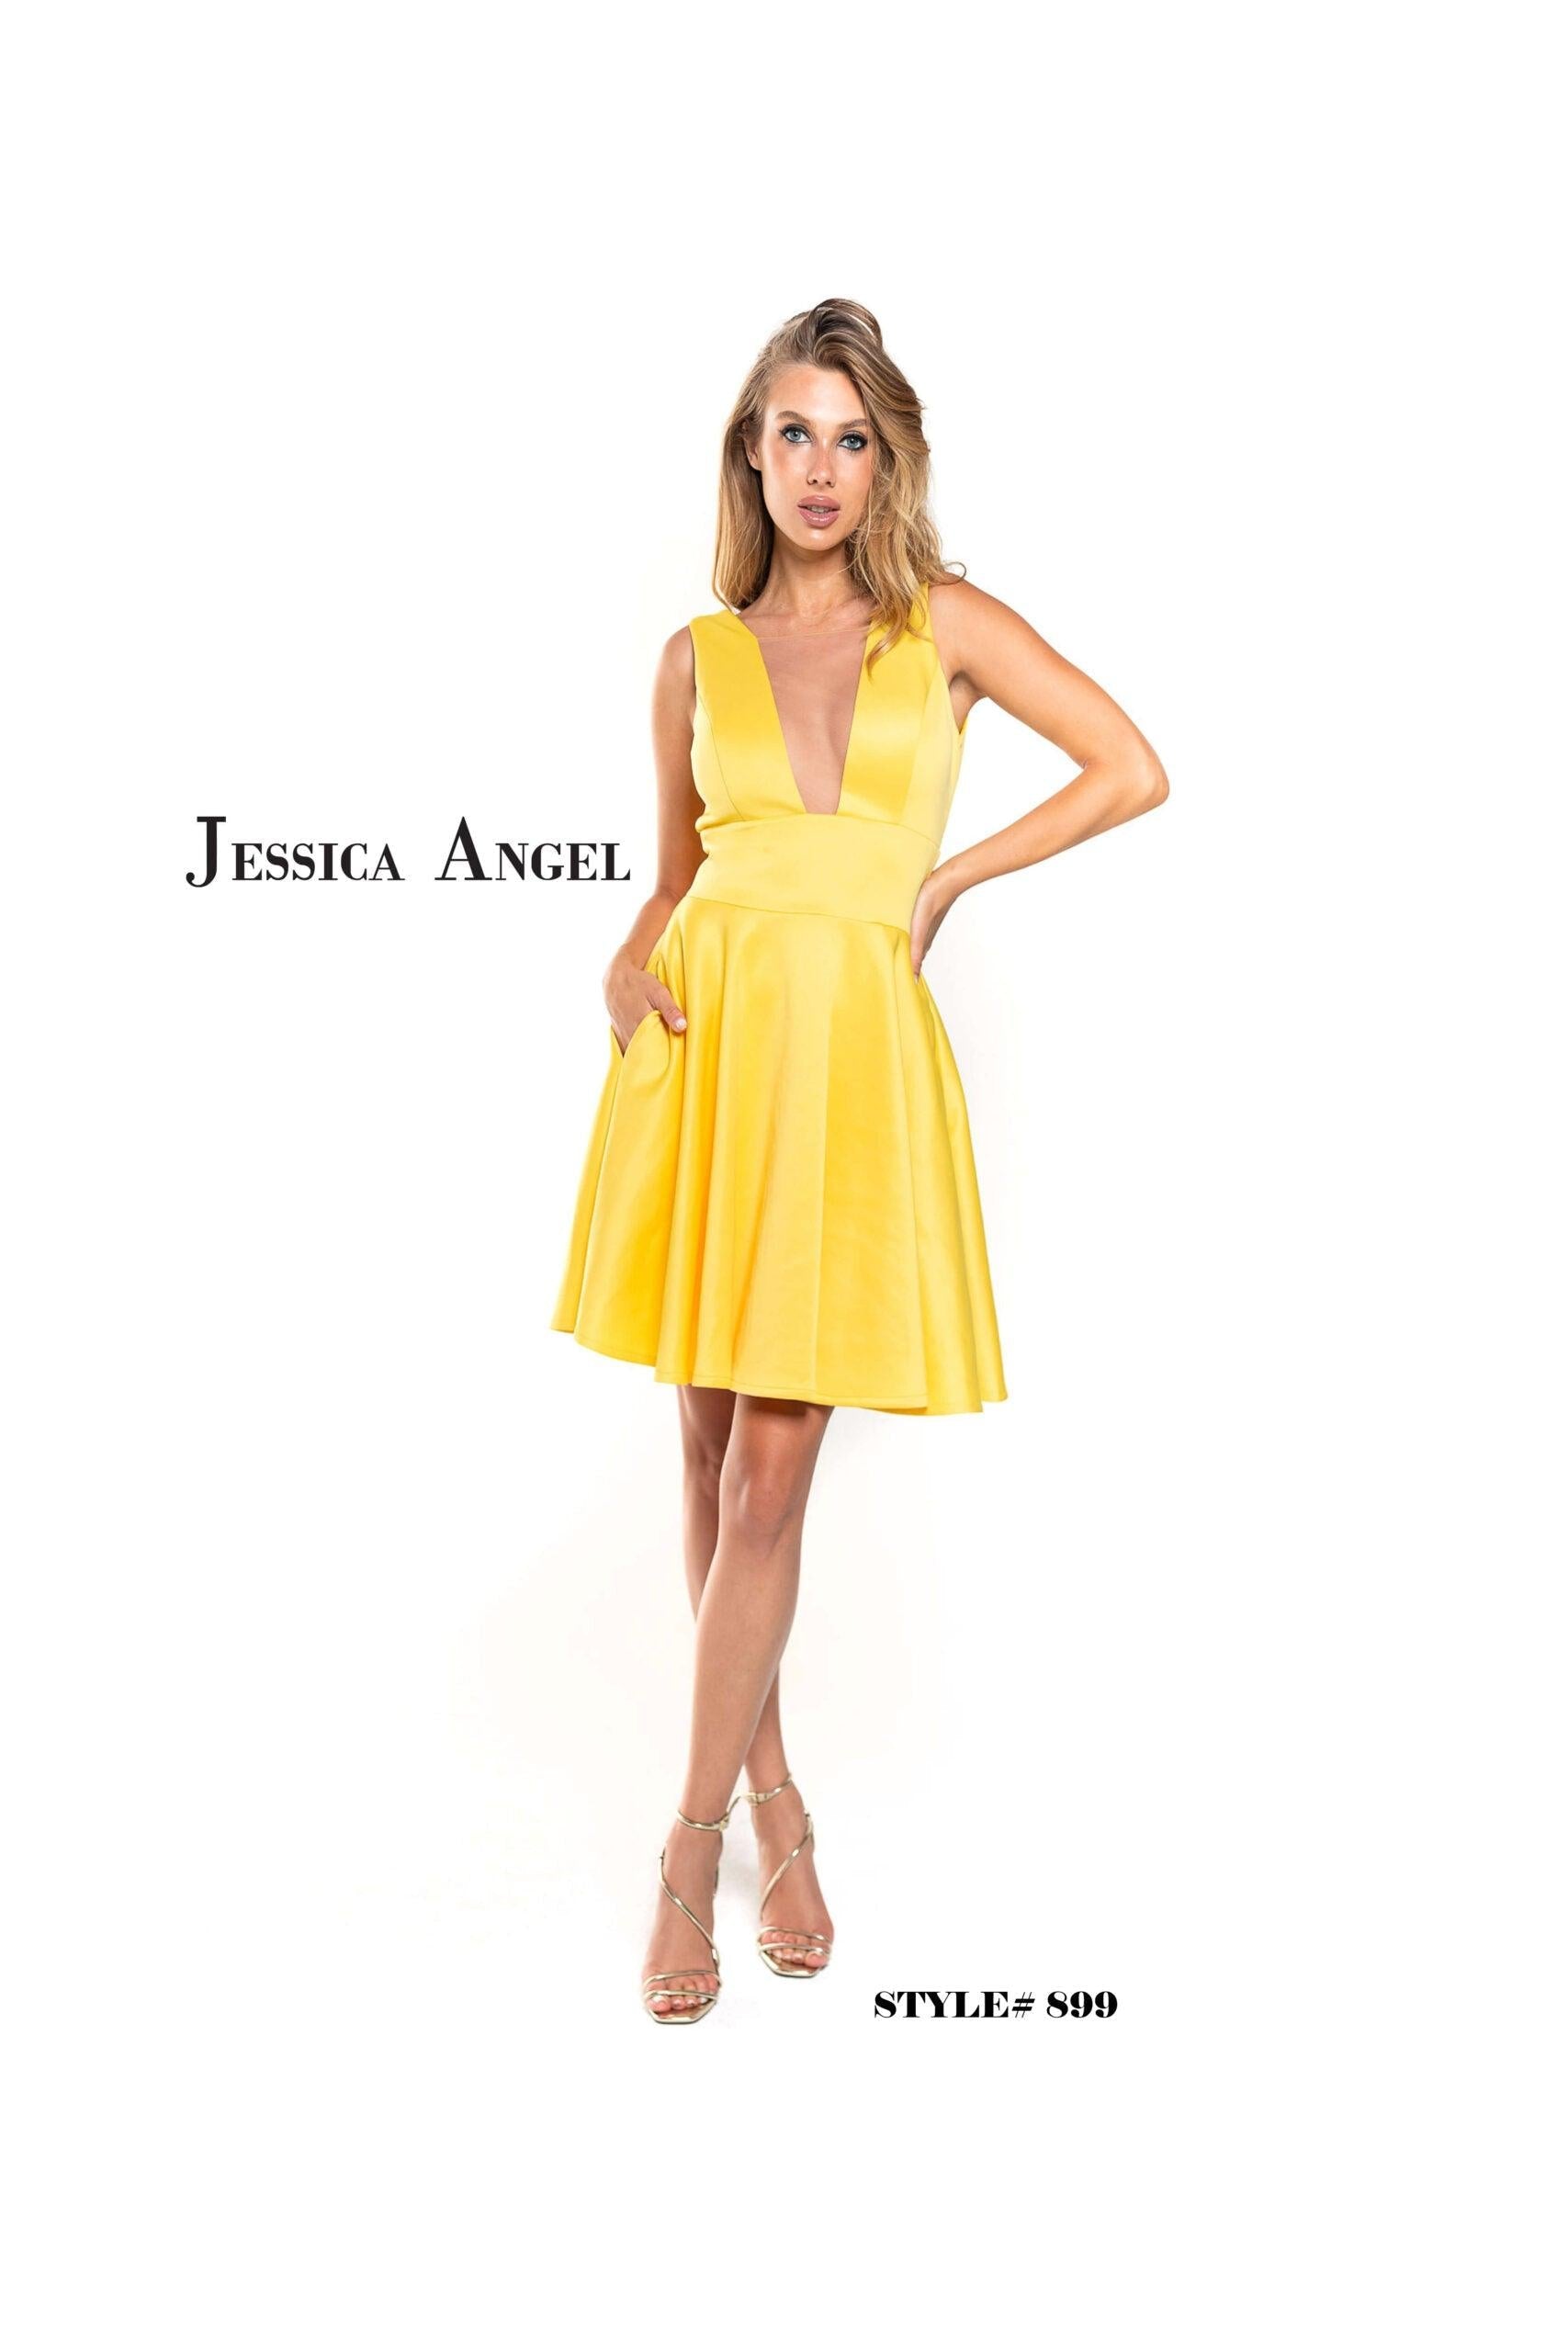 Jessica Angel Short Sleeveless Cocktail Dress 899 - The Dress Outlet